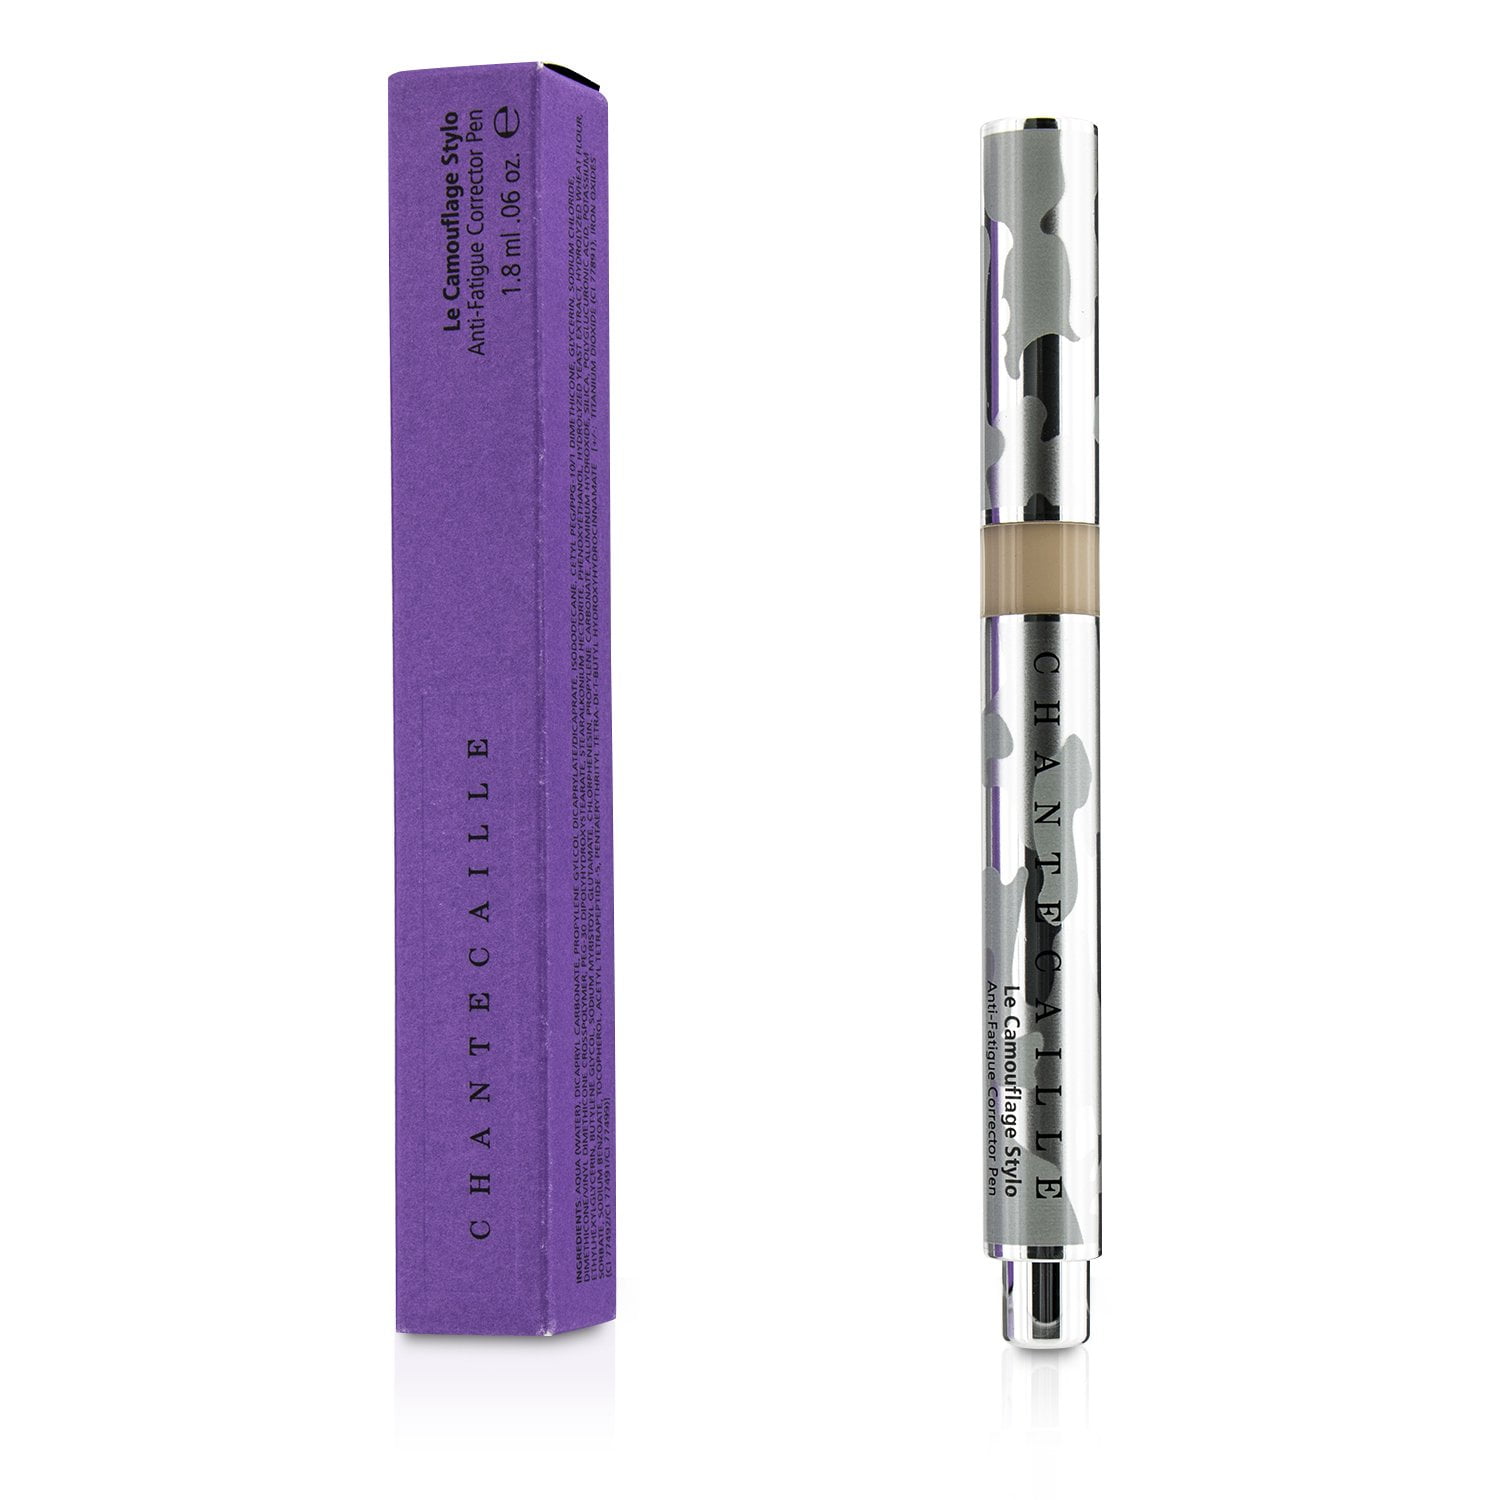 Le Camouflage Stylo Anti Fatigue Corrector Pen